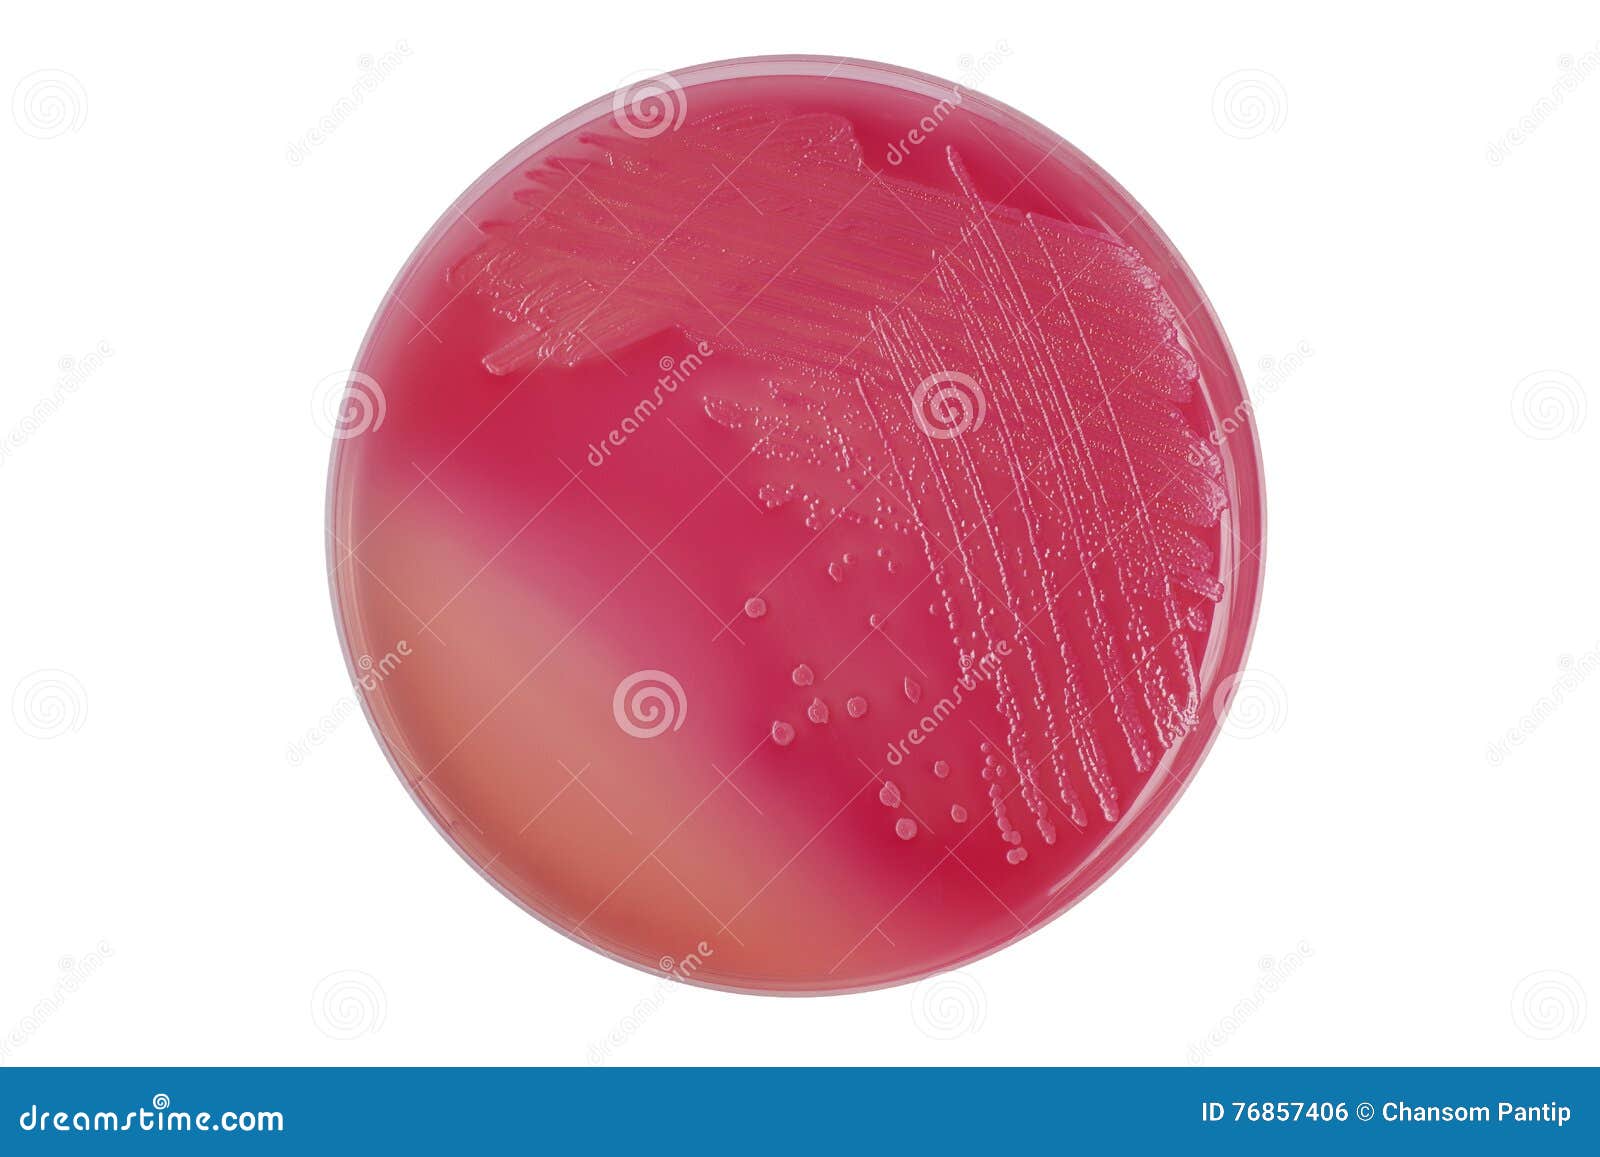 e. coli (escherichia coli) bacterial colonies on macconkey agar p